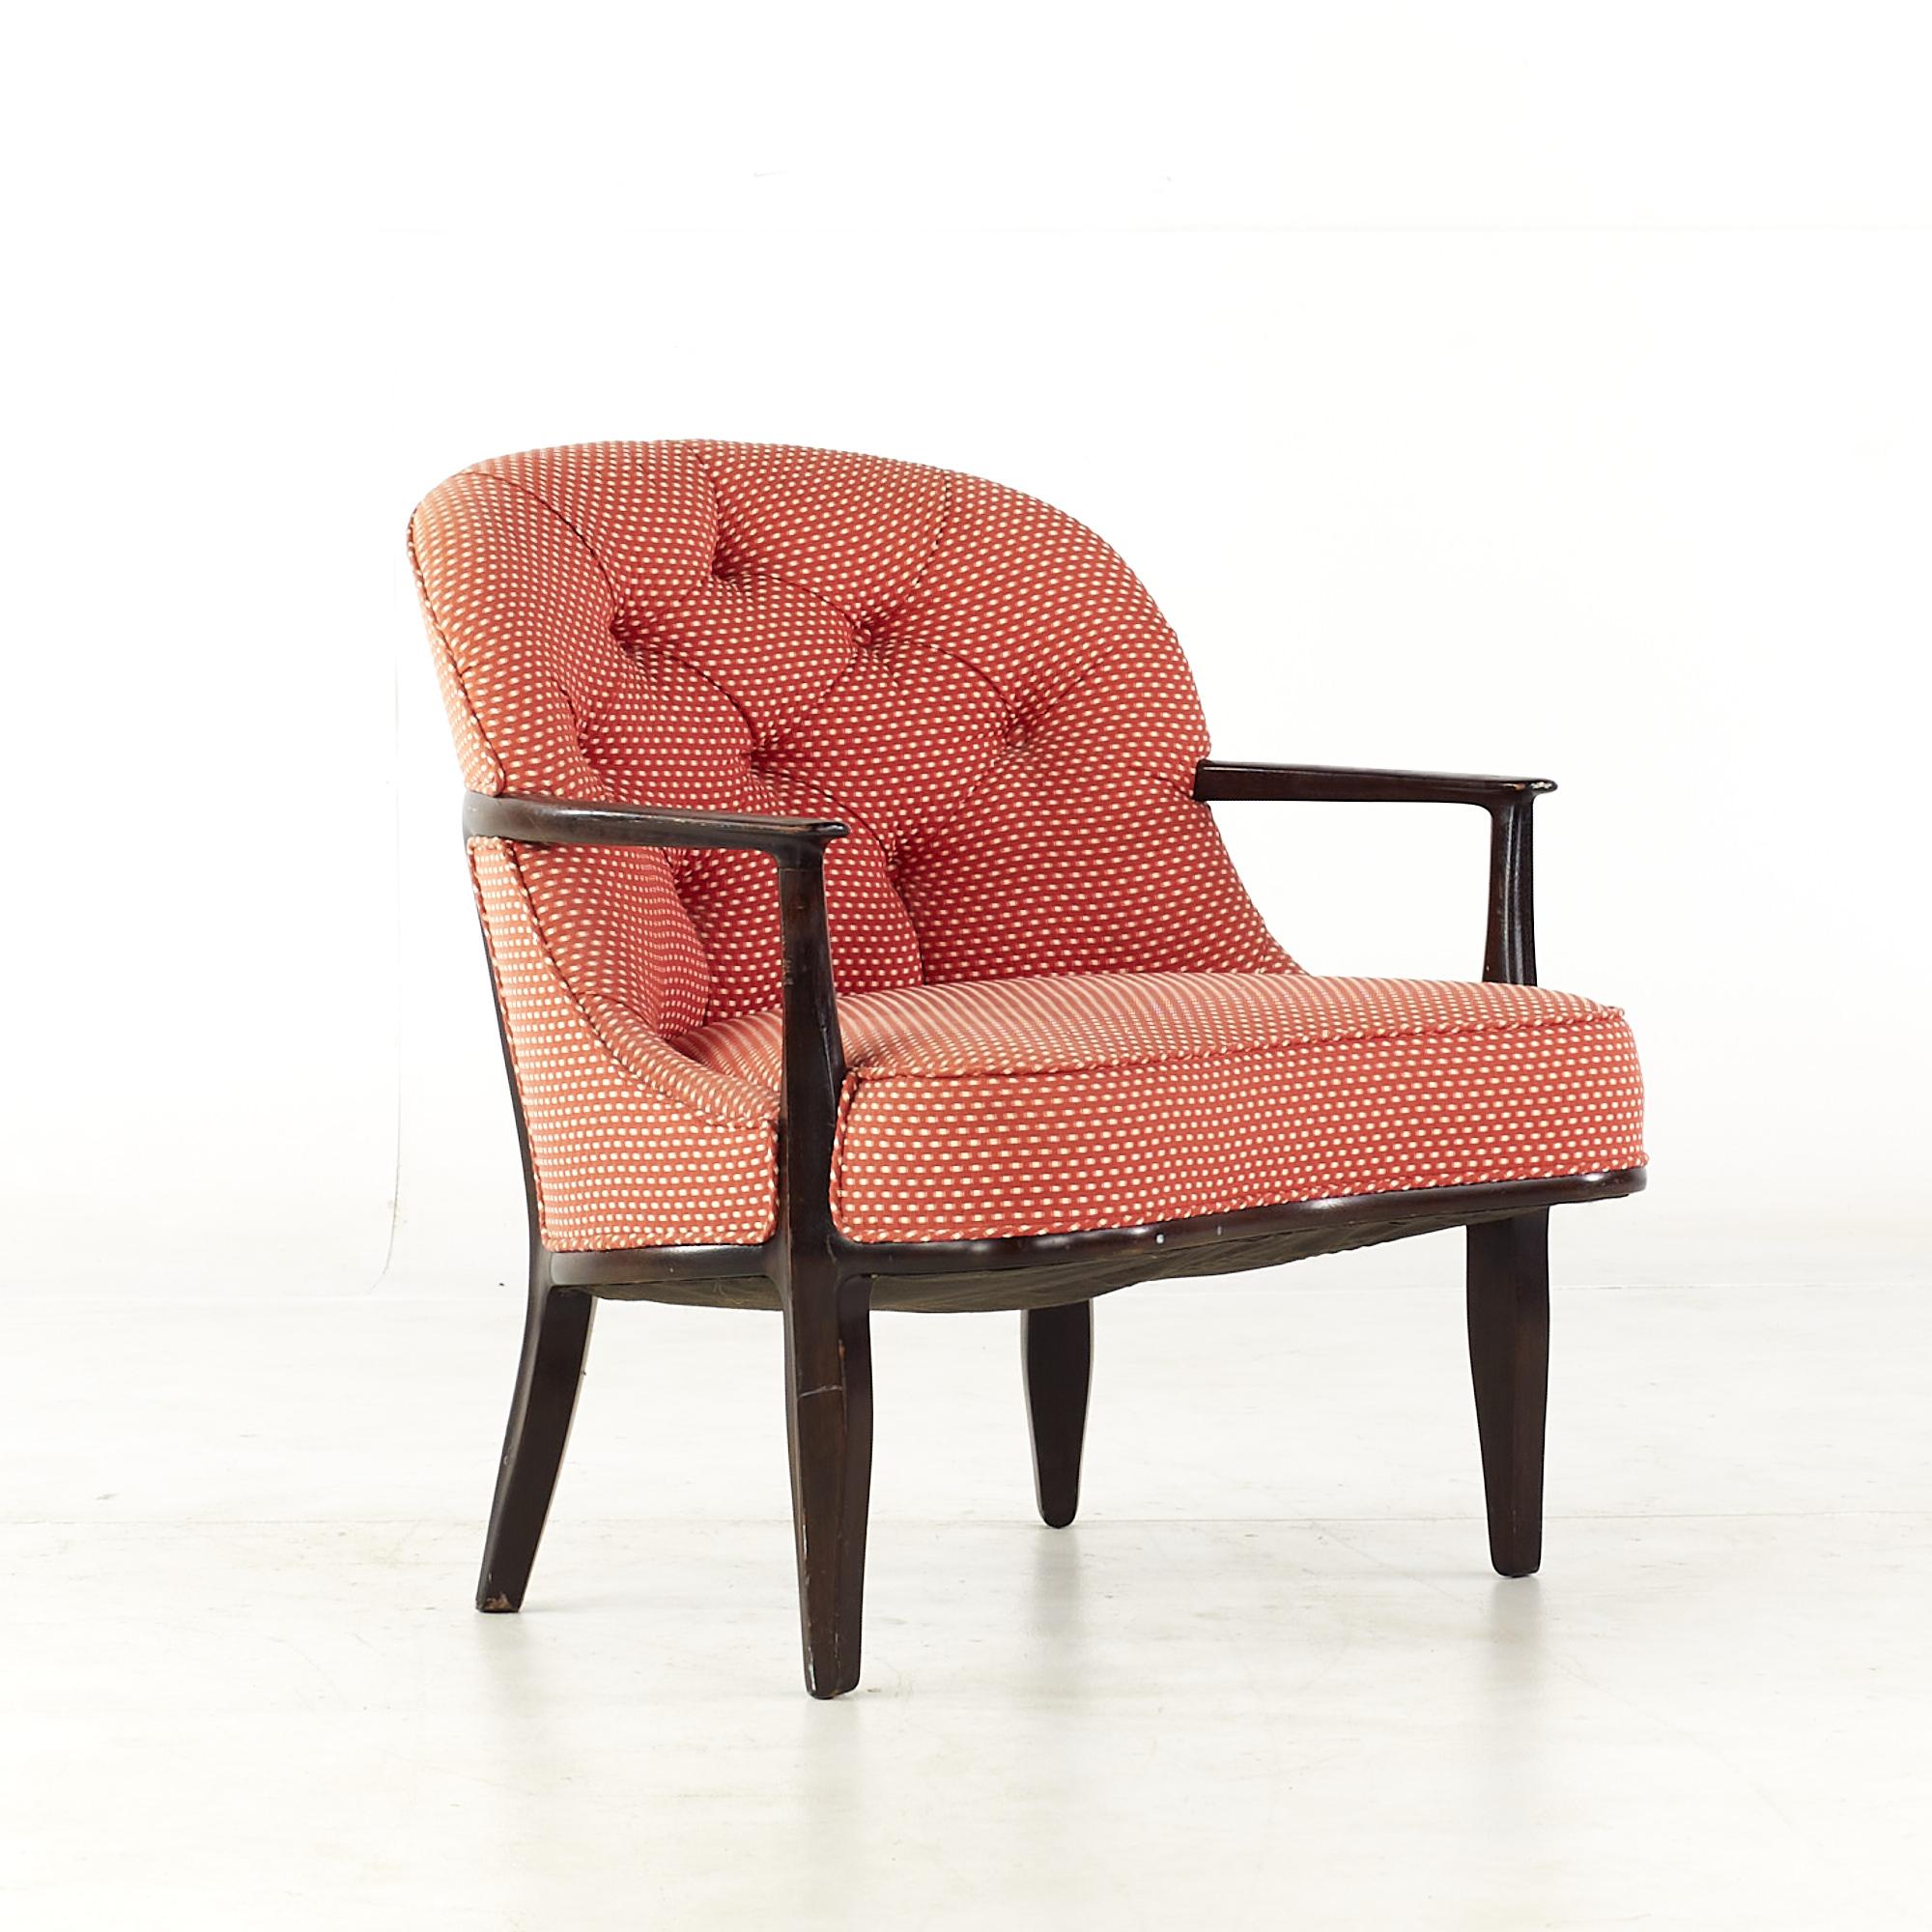 American Edward Wormley for Dunbar Janus Mid-Century Lounge Chairs, Pair